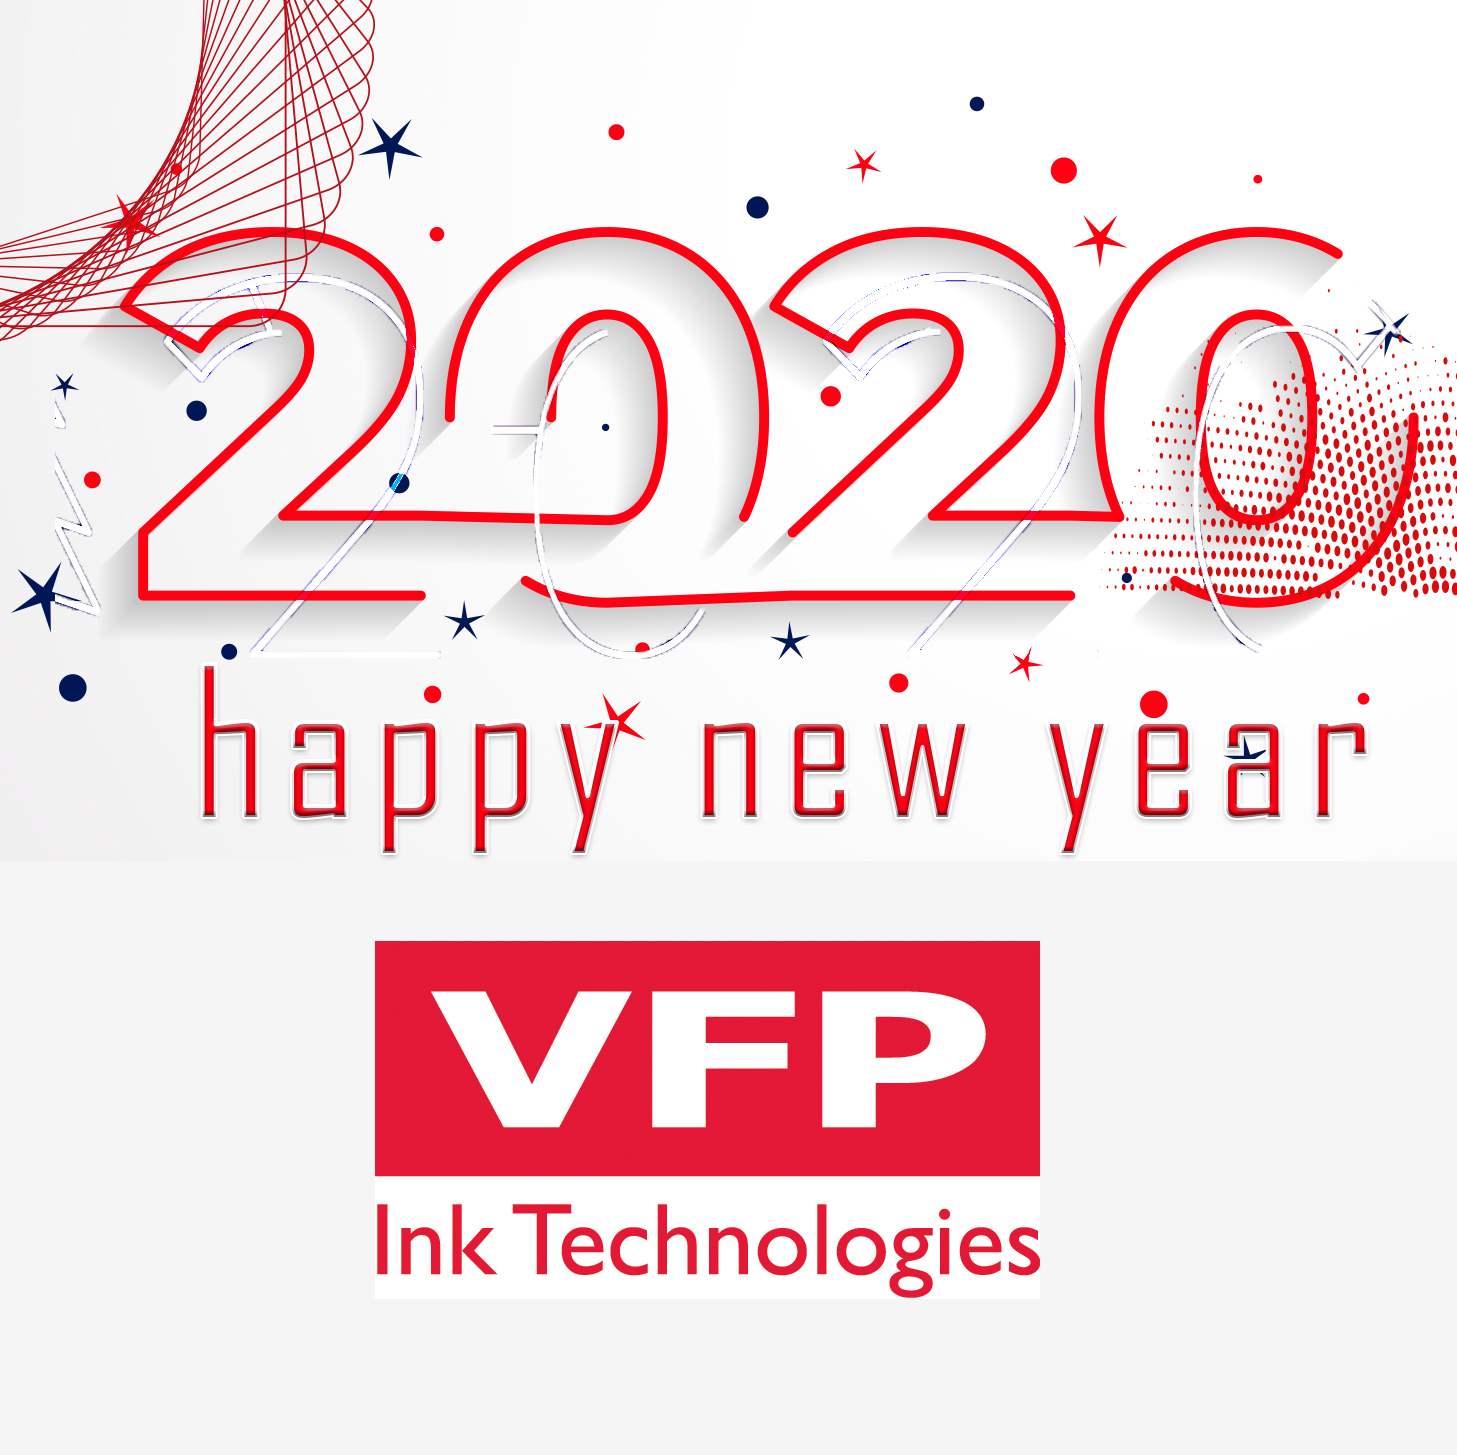 2020 Nos événements VFP Ink Technologies FR